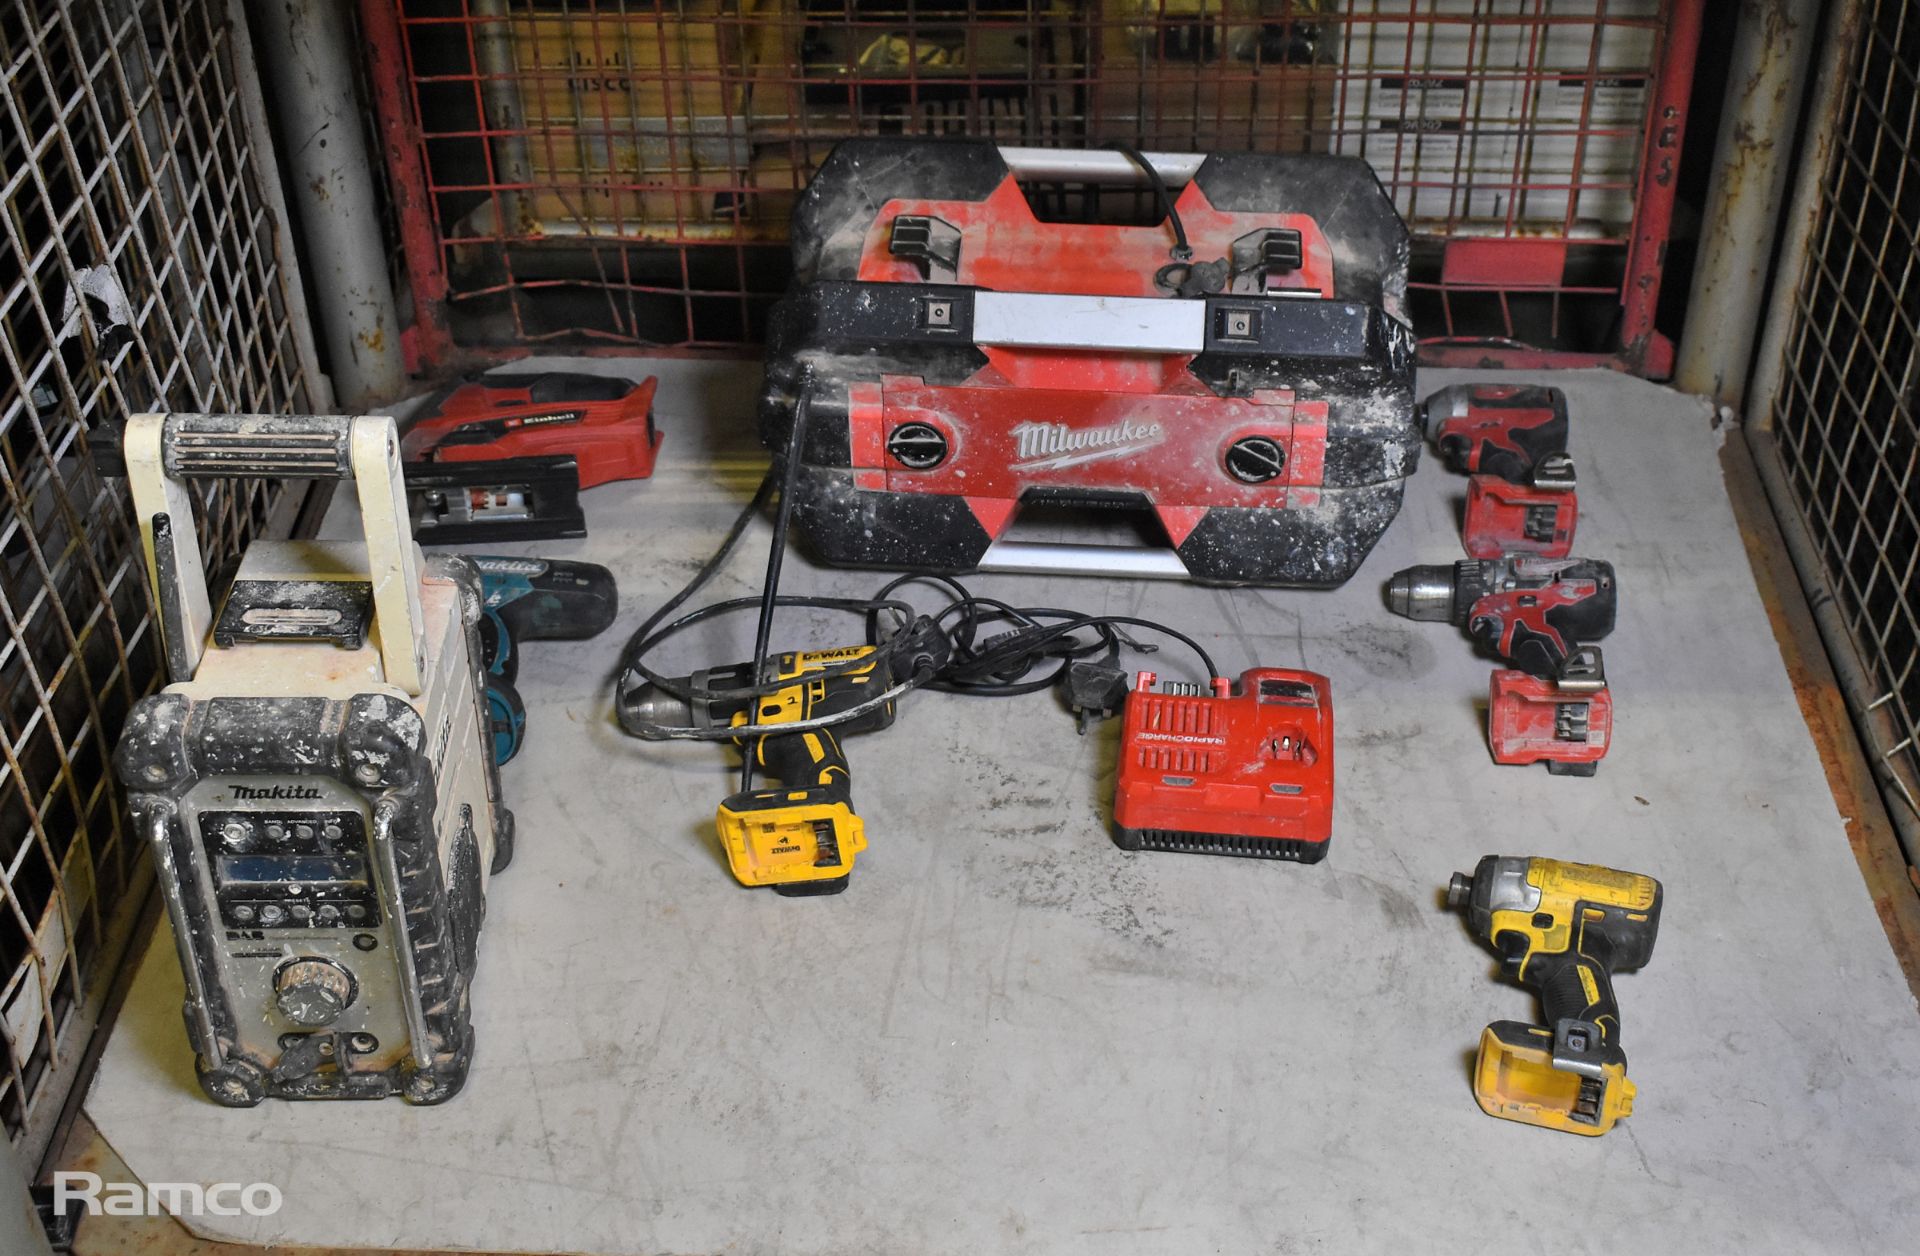 Cordless power tools - Milwaukee, Dewalt and Makita and Milwaukee C1228 DCR radio